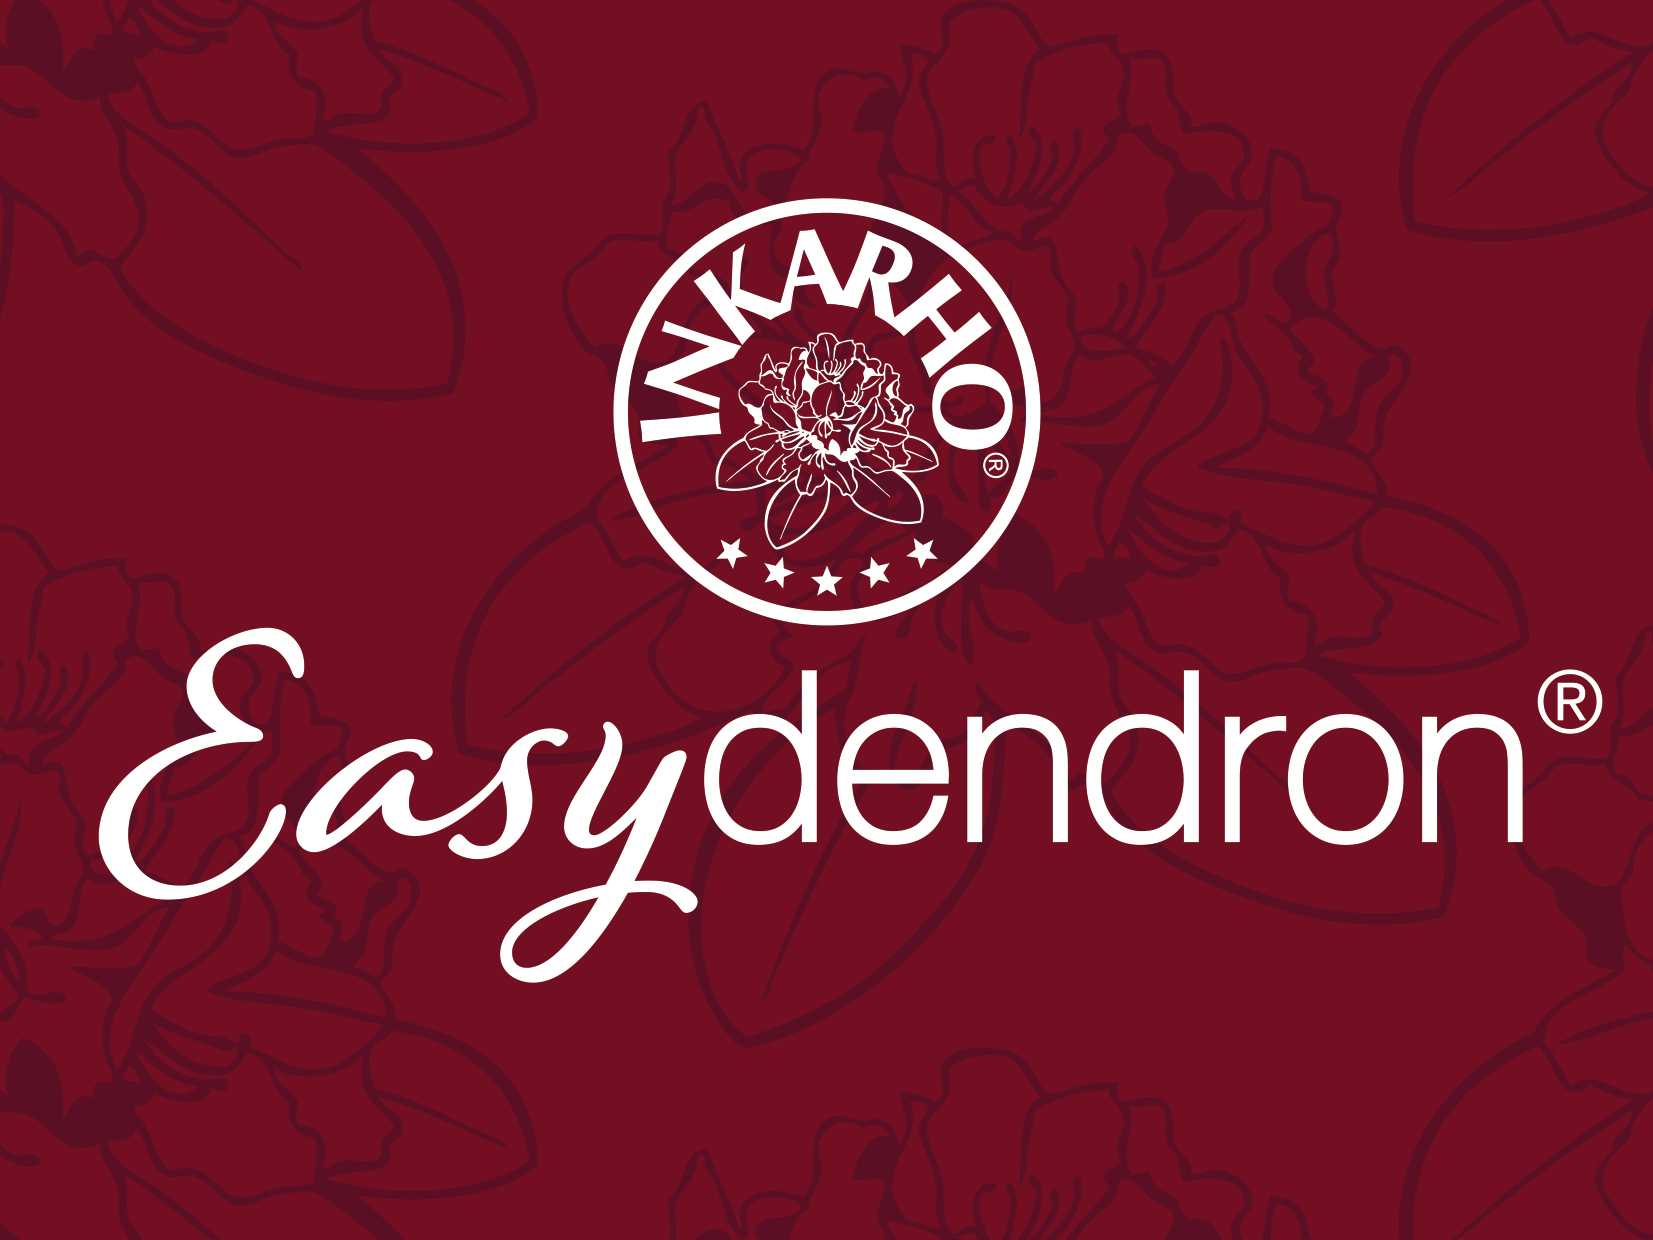 Easydendron Branding